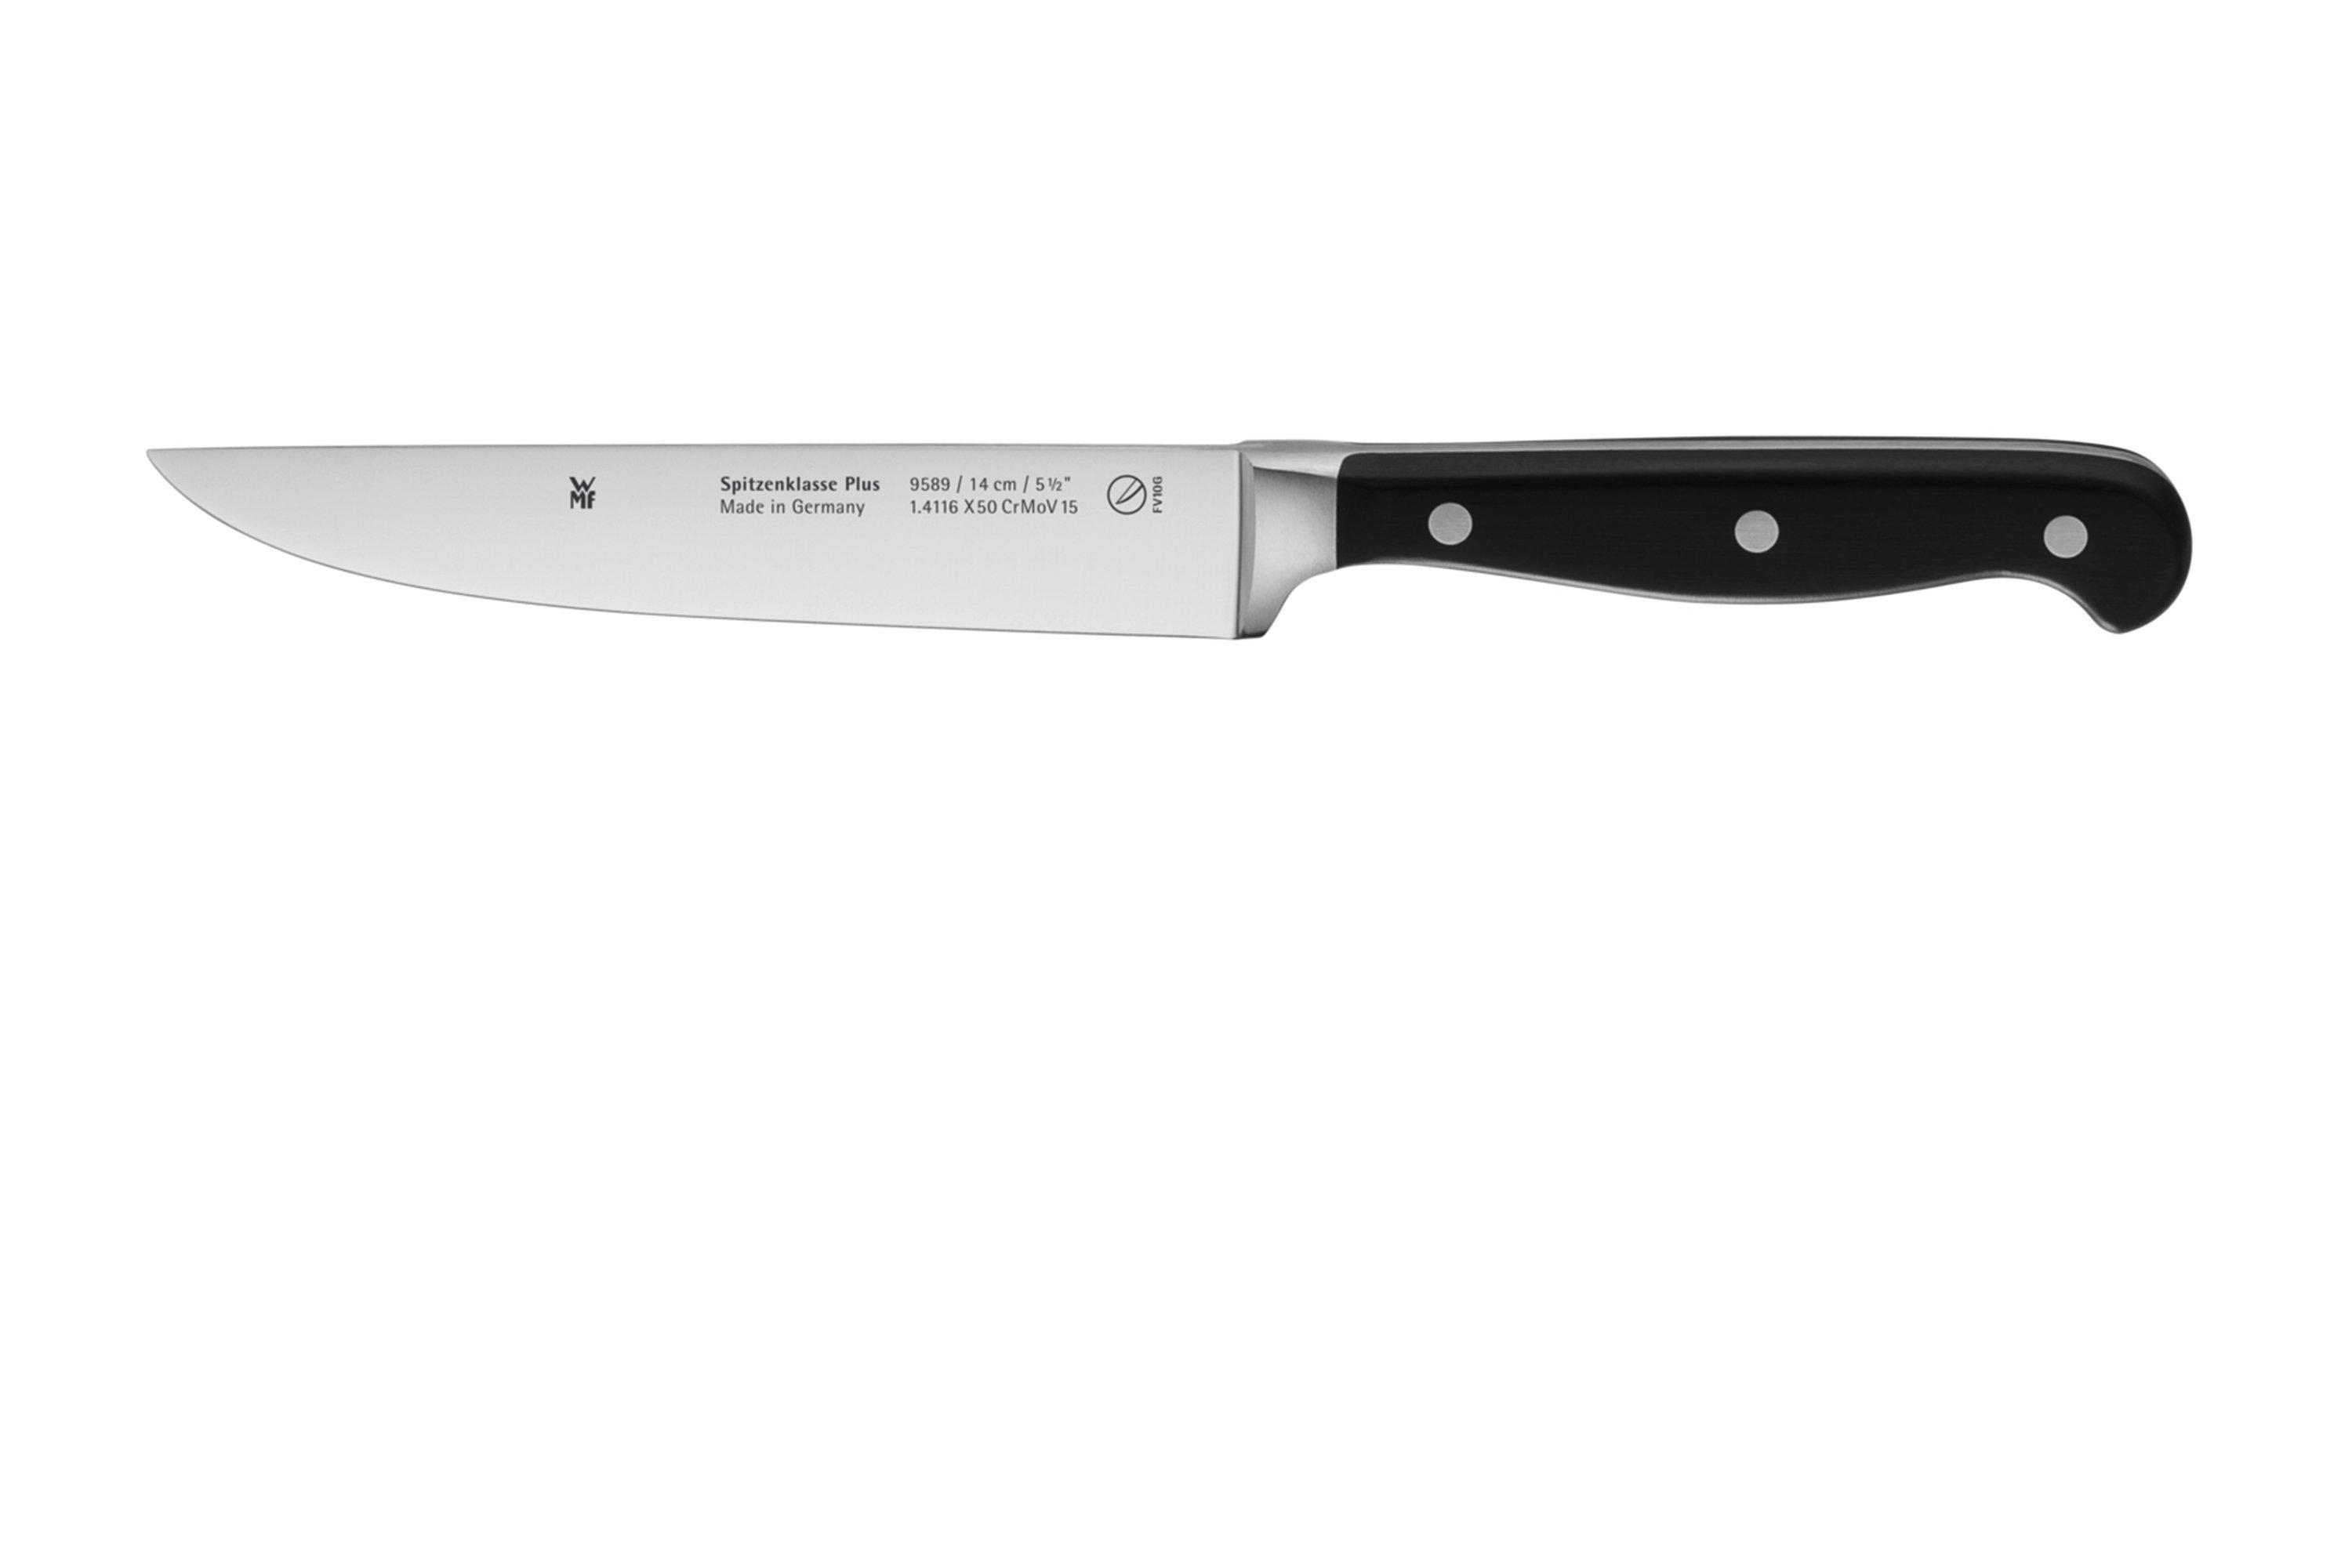 knife | Spitzenklasse Plus set shopping 3-piece Advantageously 1894919992, at WMF